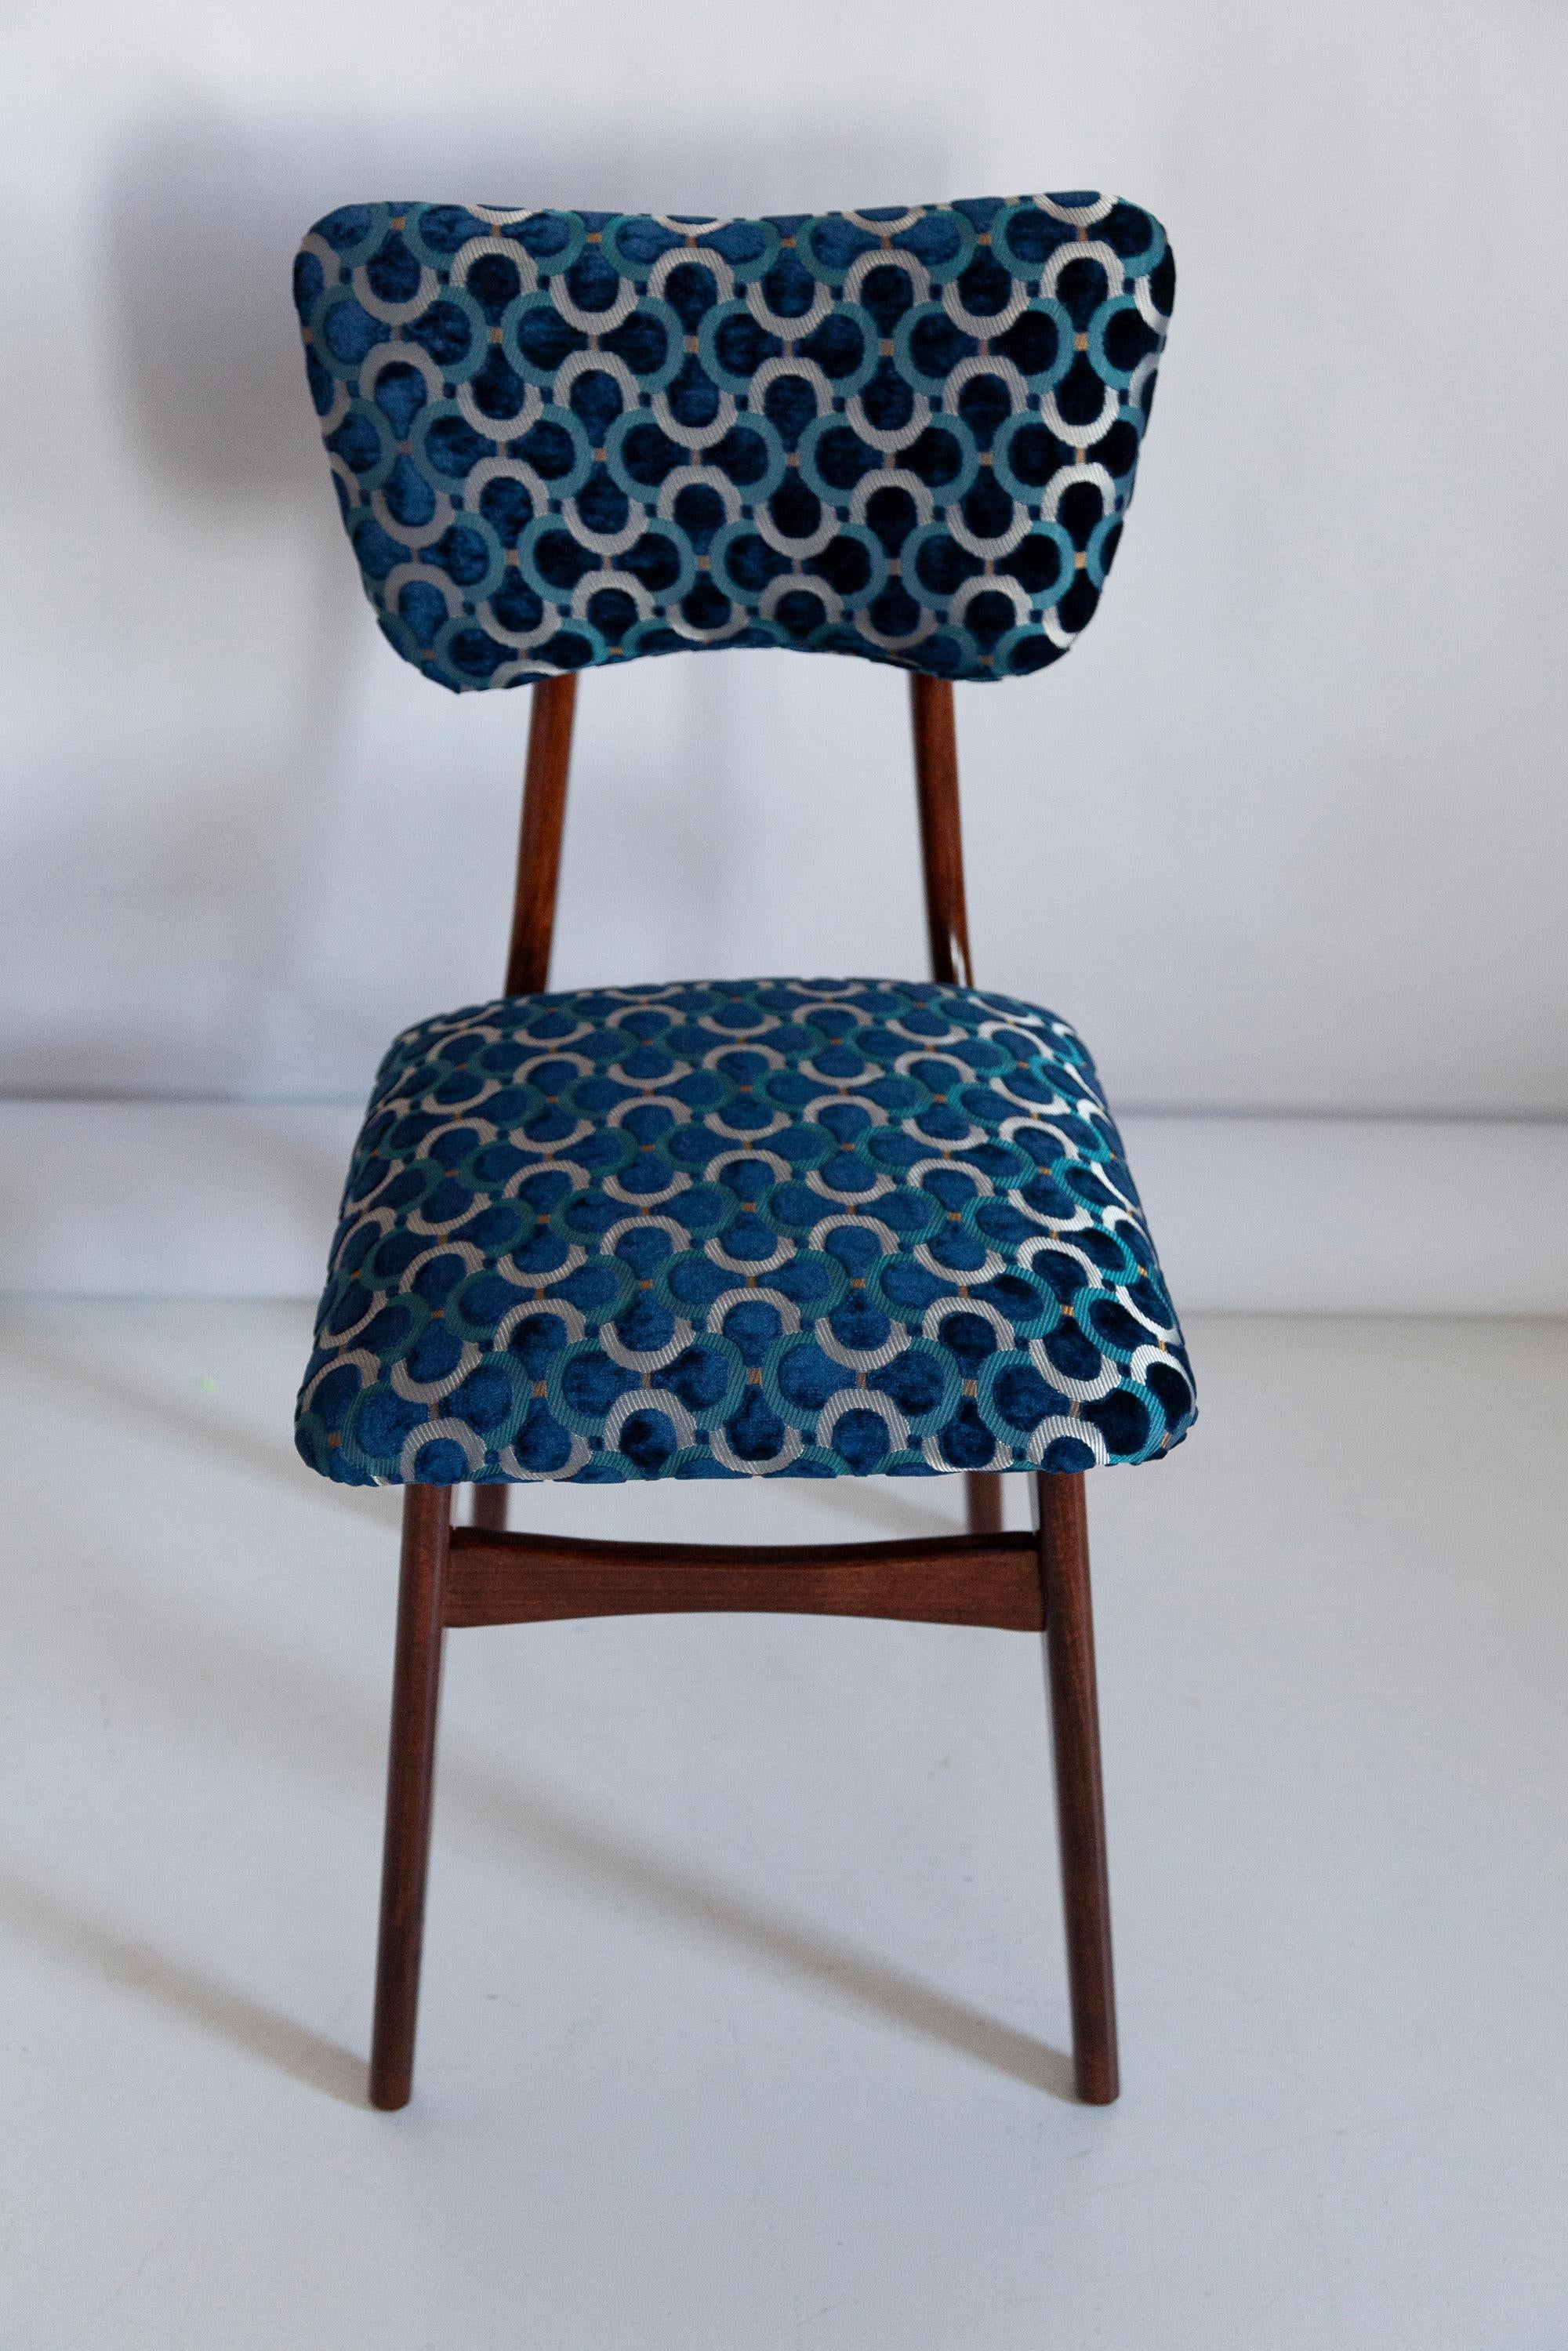 Ten Mid Century Butterfly Chairs, Blue Scarabeo Velvet, Dark Wood, Europe, 1960s For Sale 4